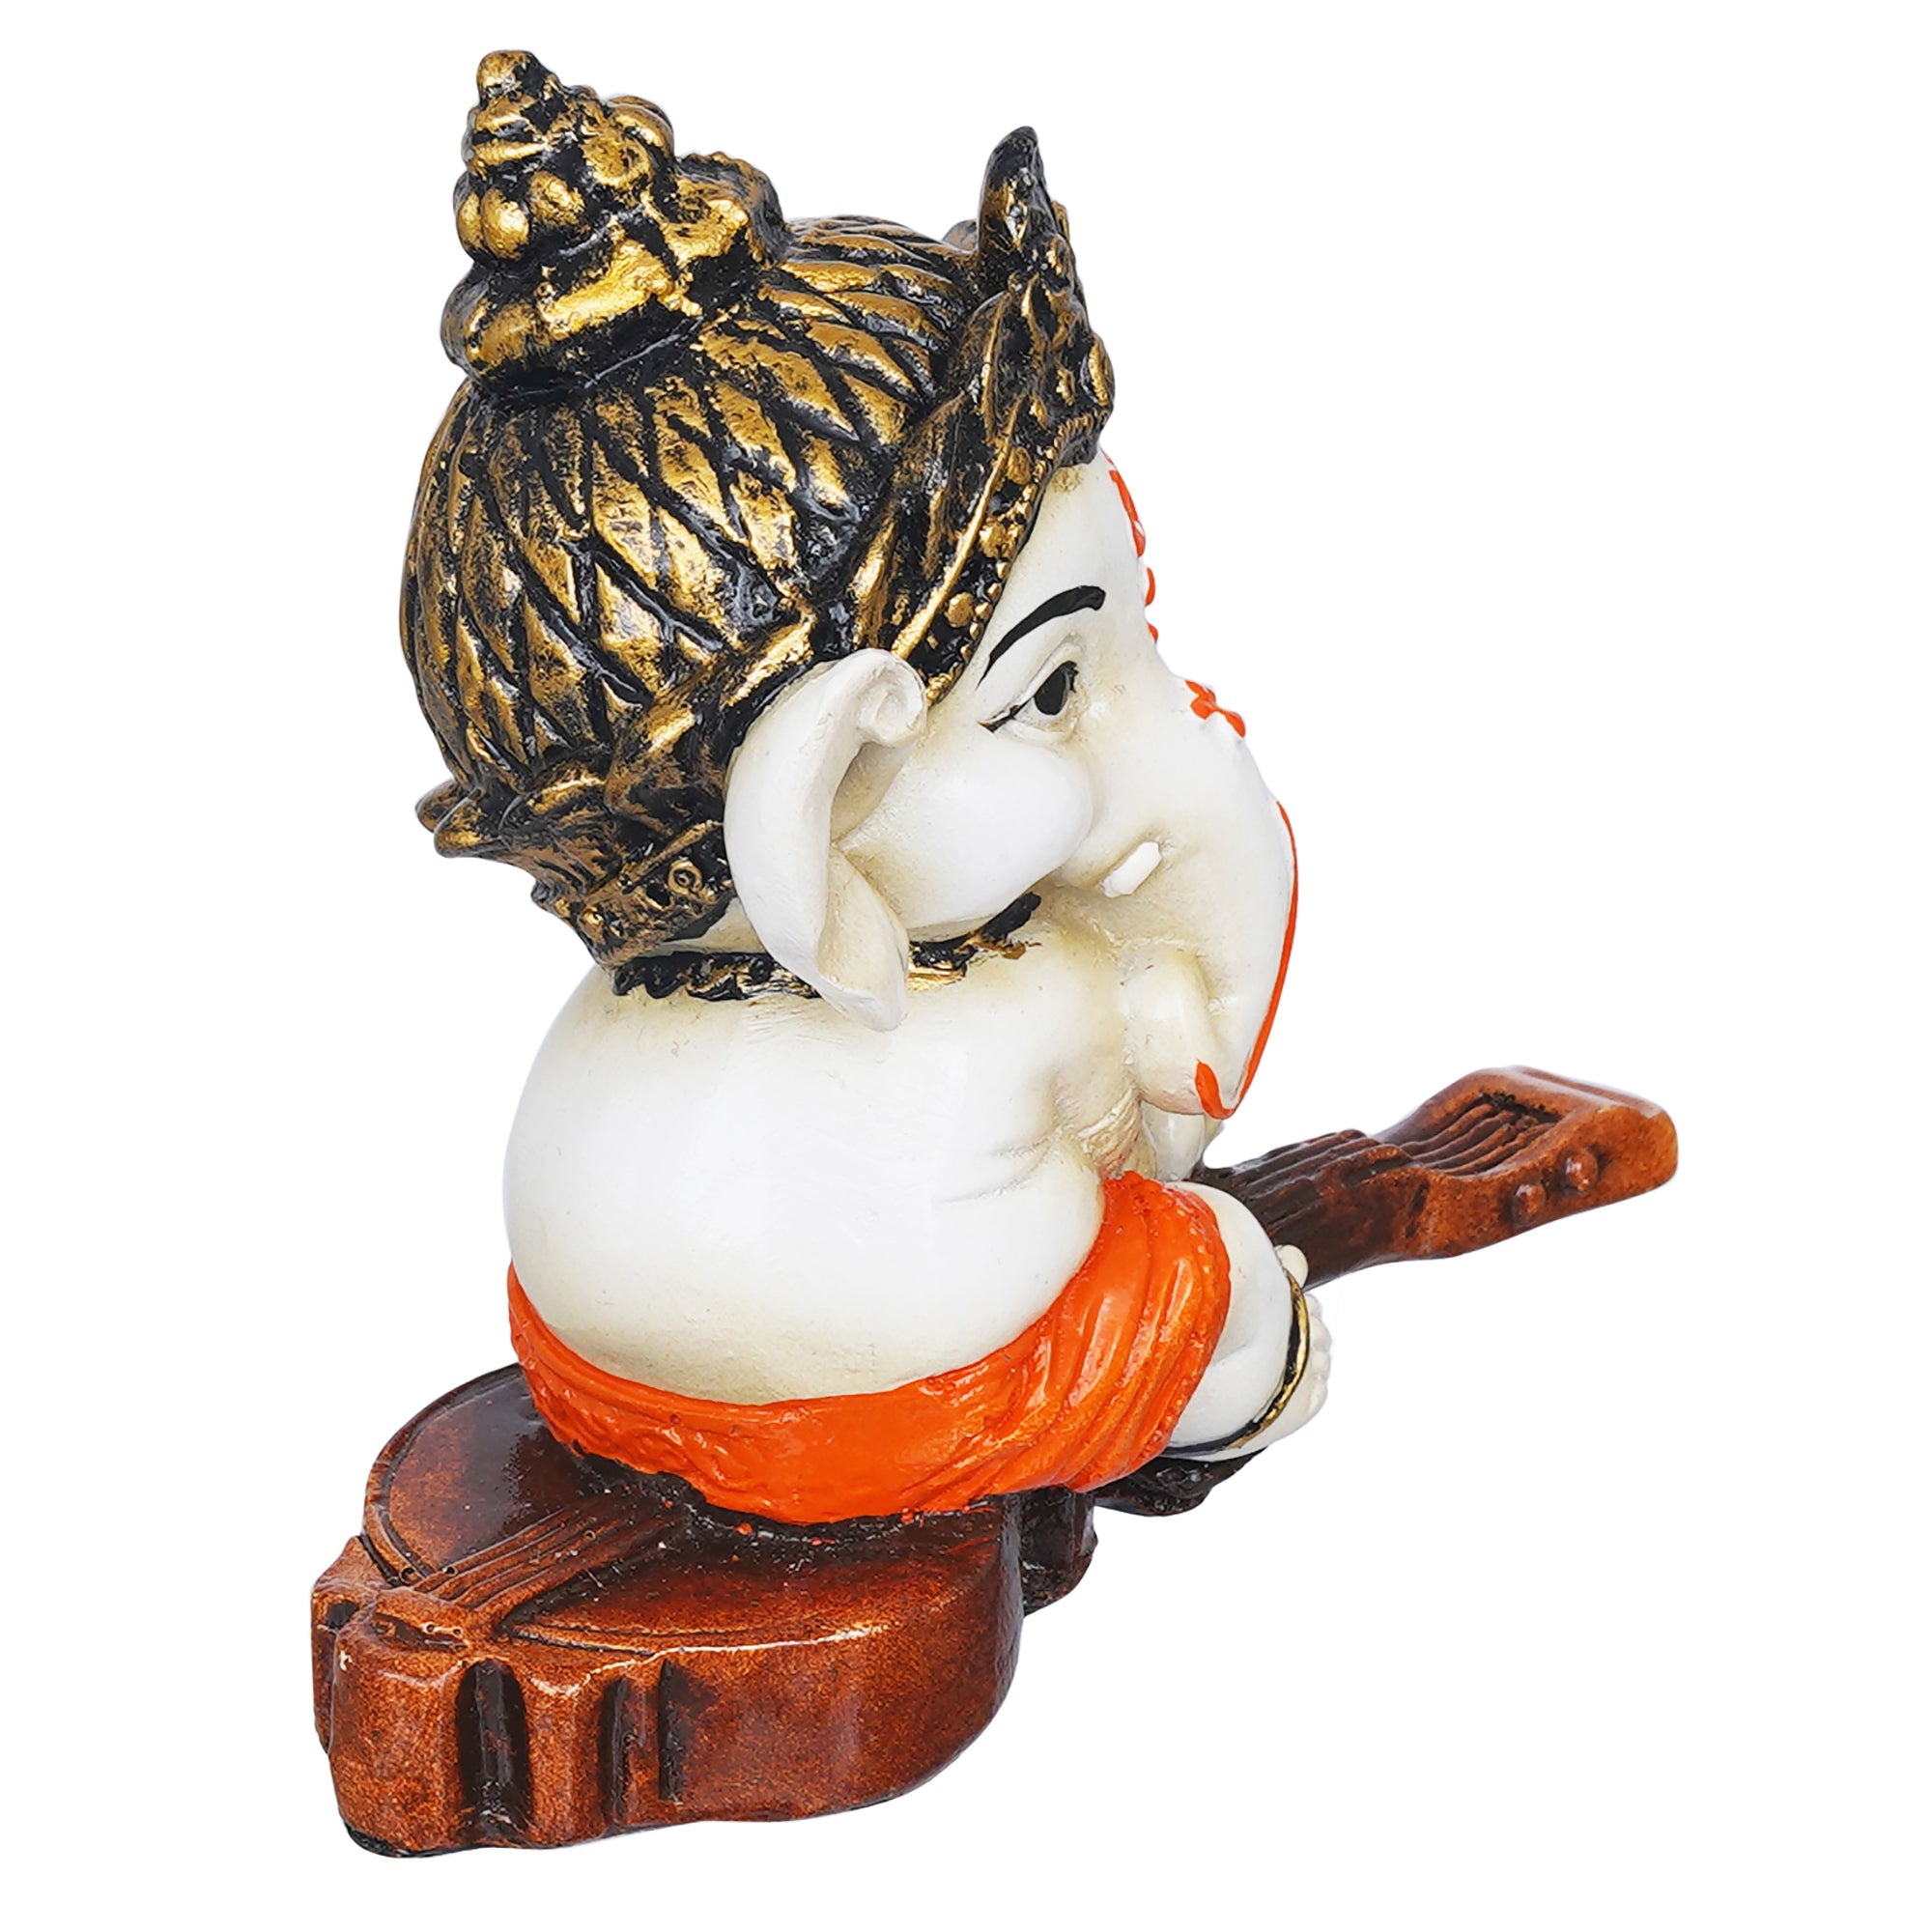 eCraftIndia Orange Polyresin Decorated Lord Ganesha Idol Sitting on Veena Musical Instrument 8